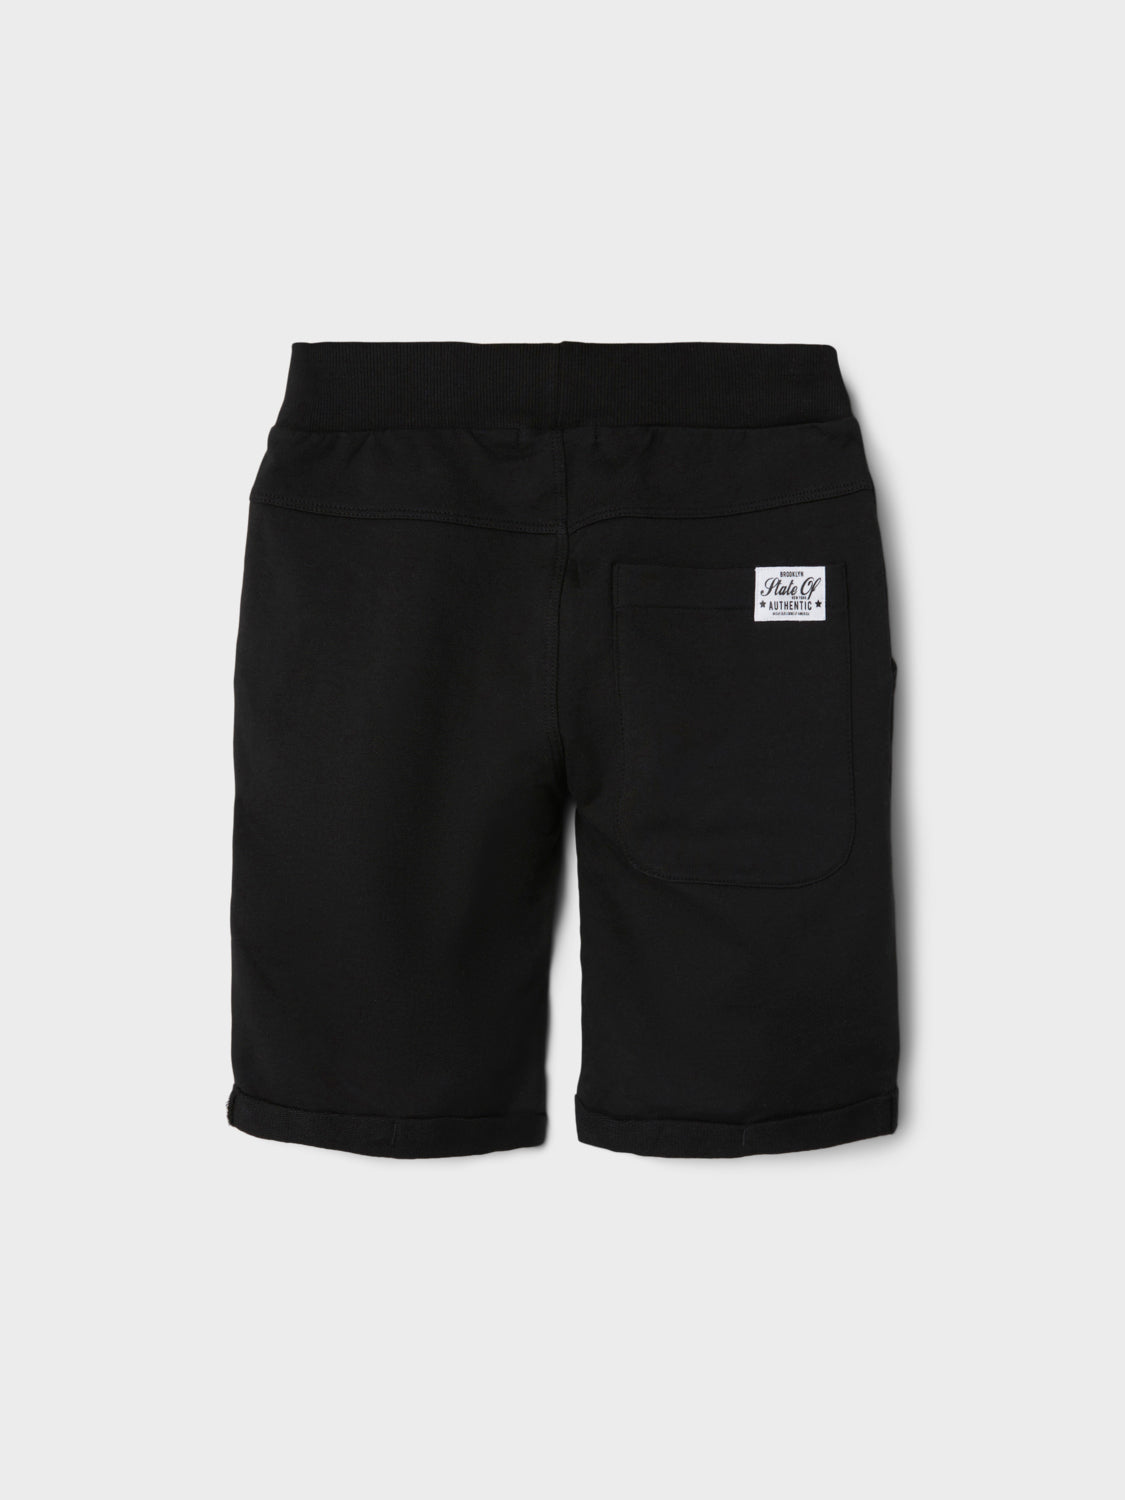 NKMVERMO Shorts - Black